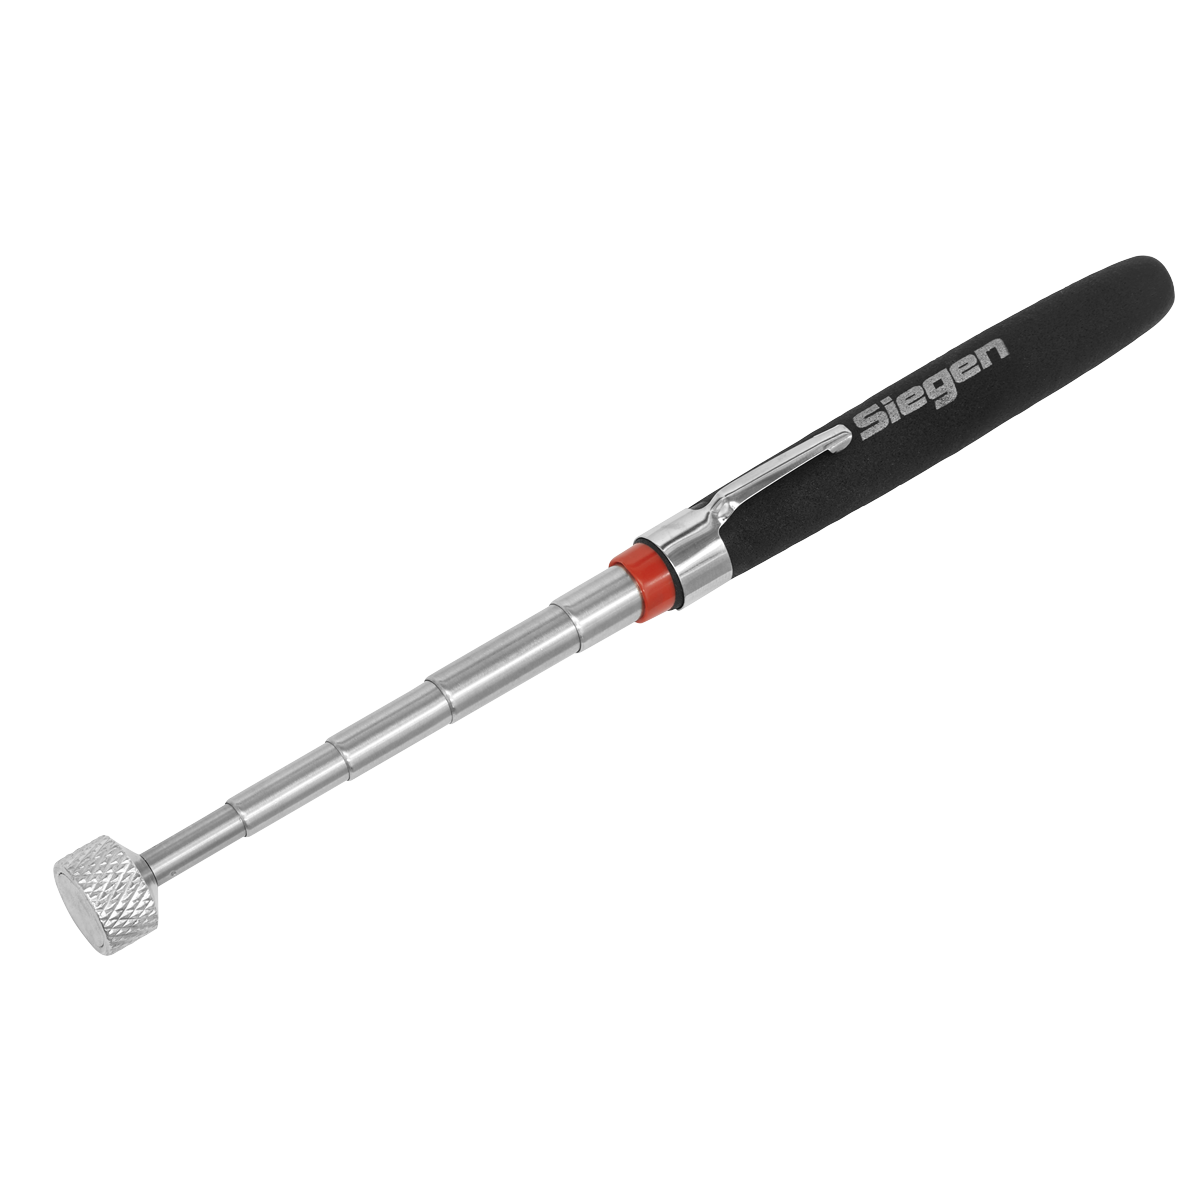 Sealey Heavy-Duty Magnetic Pick-Up Tool 3.6kg Capacity